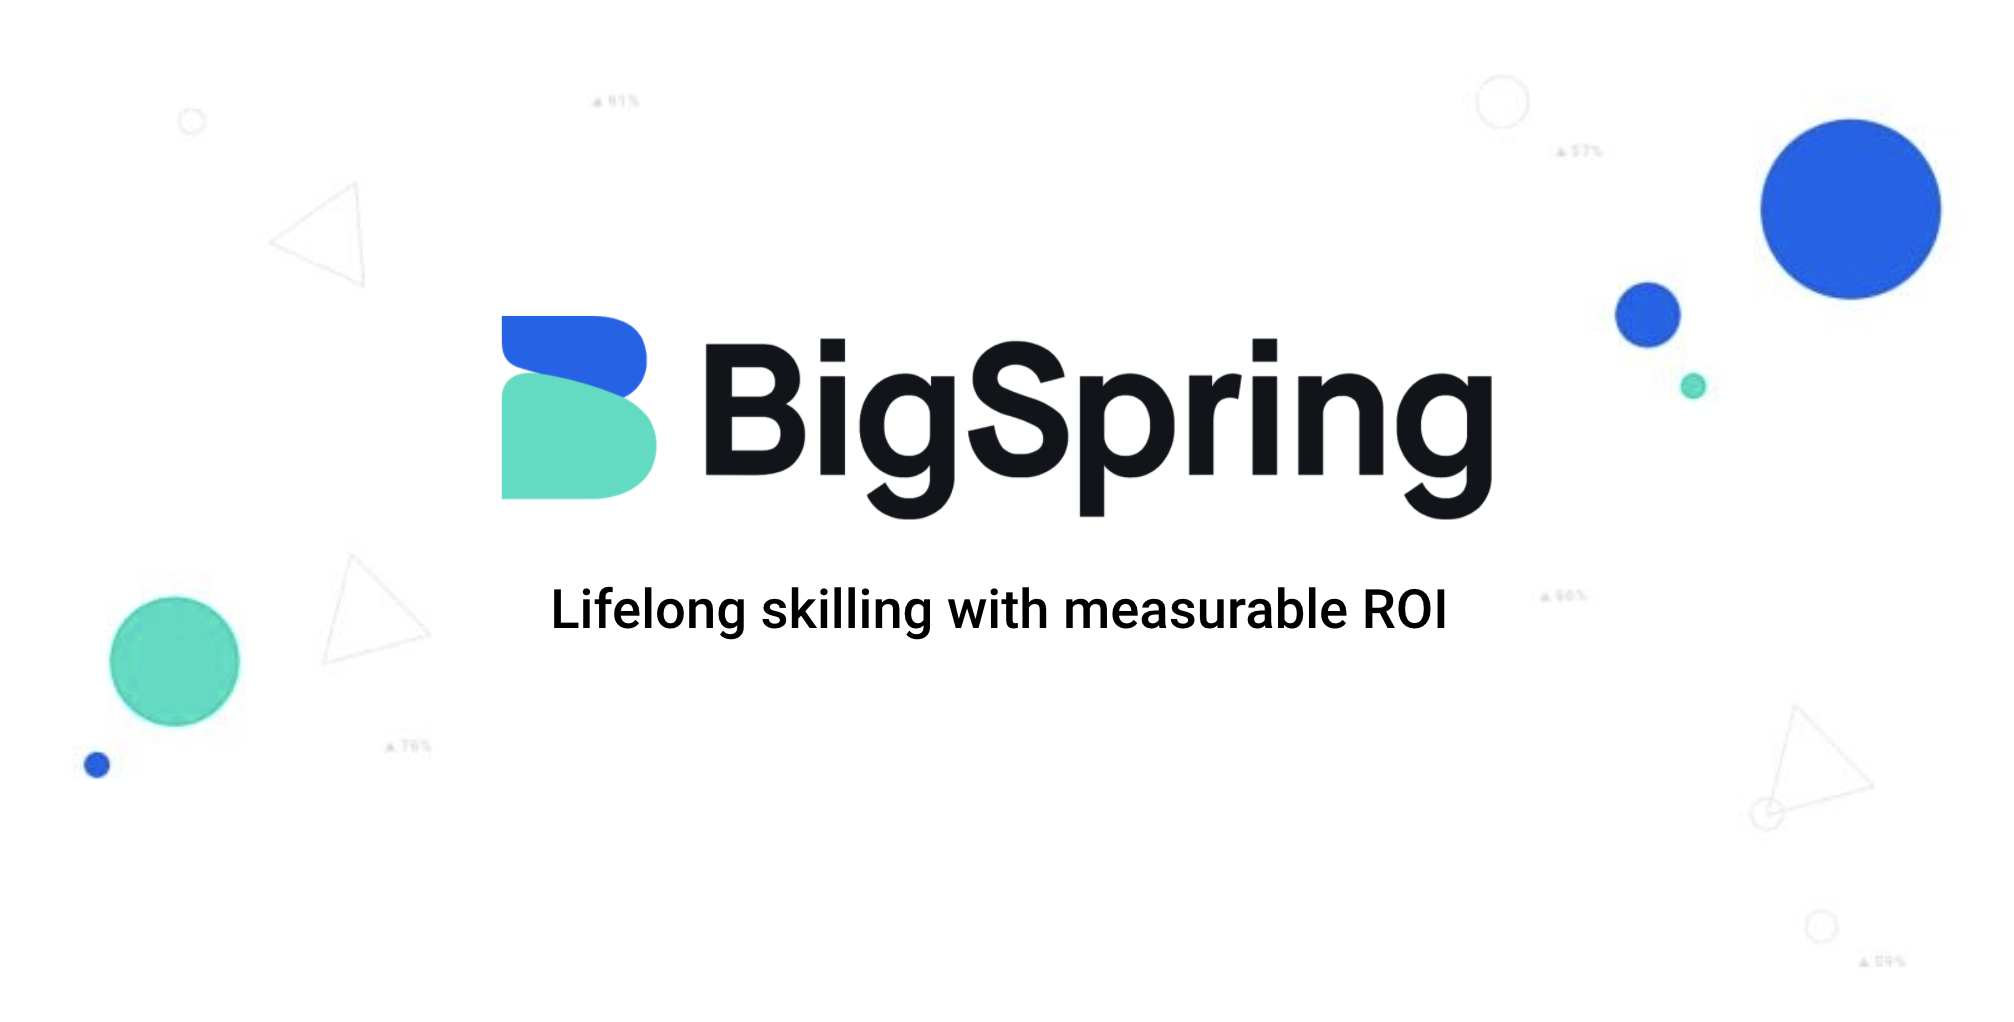 BigSpring - Lifelong skilling with measurable ROI